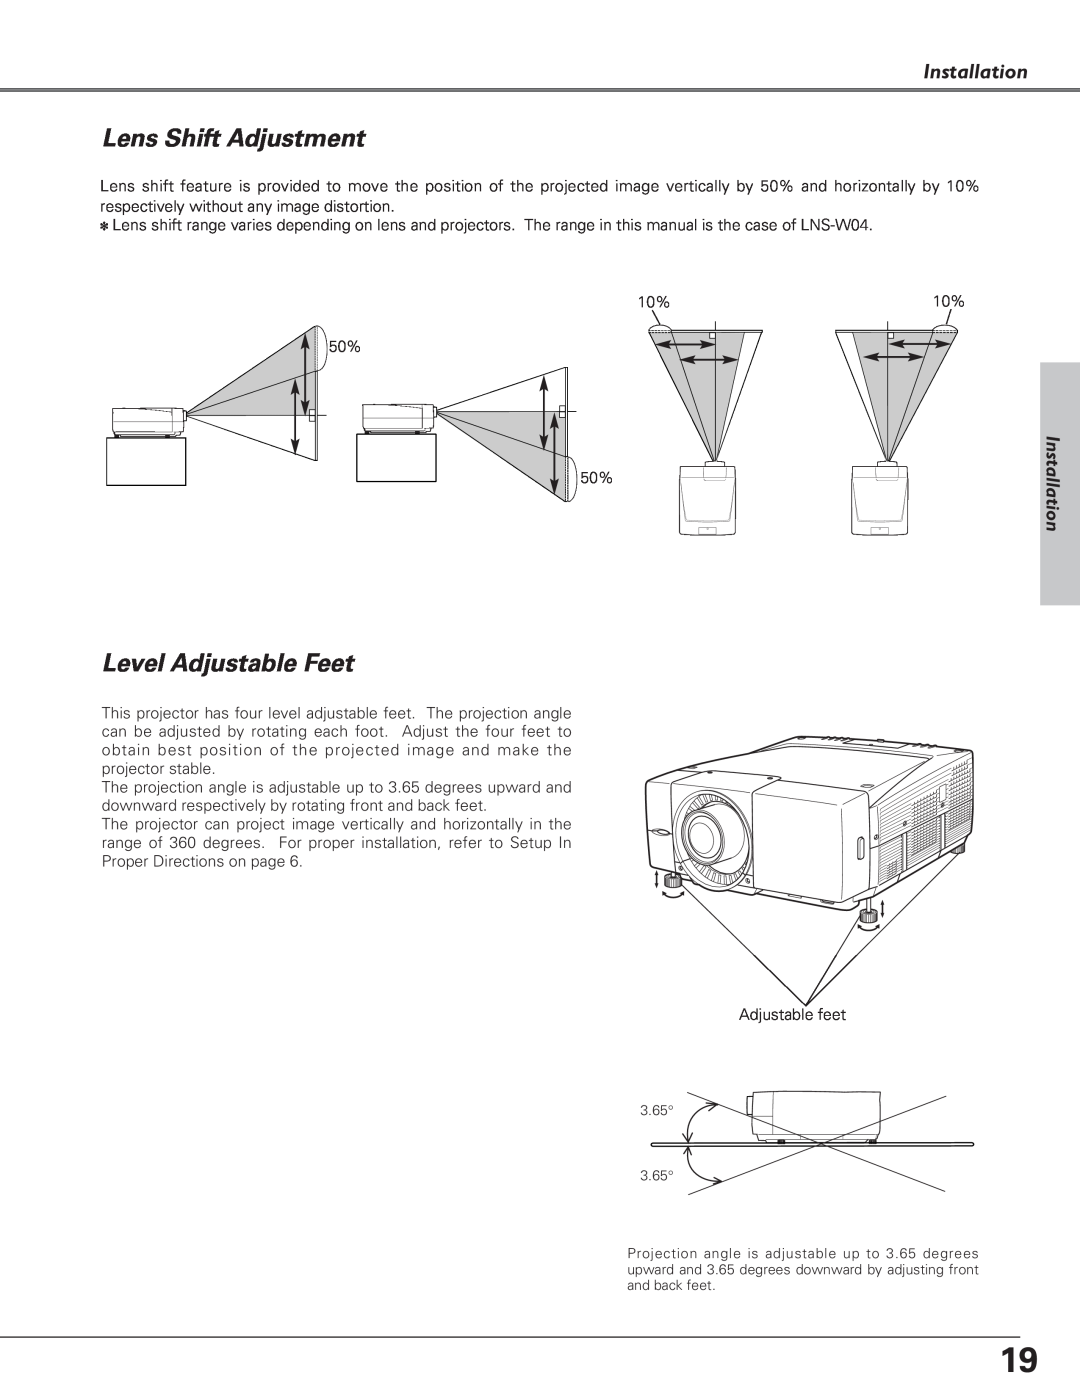 Eiki LC-SX6, LC-X6 owner manual Lens Shift Adjustment, Level Adjustable Feet, Installation 